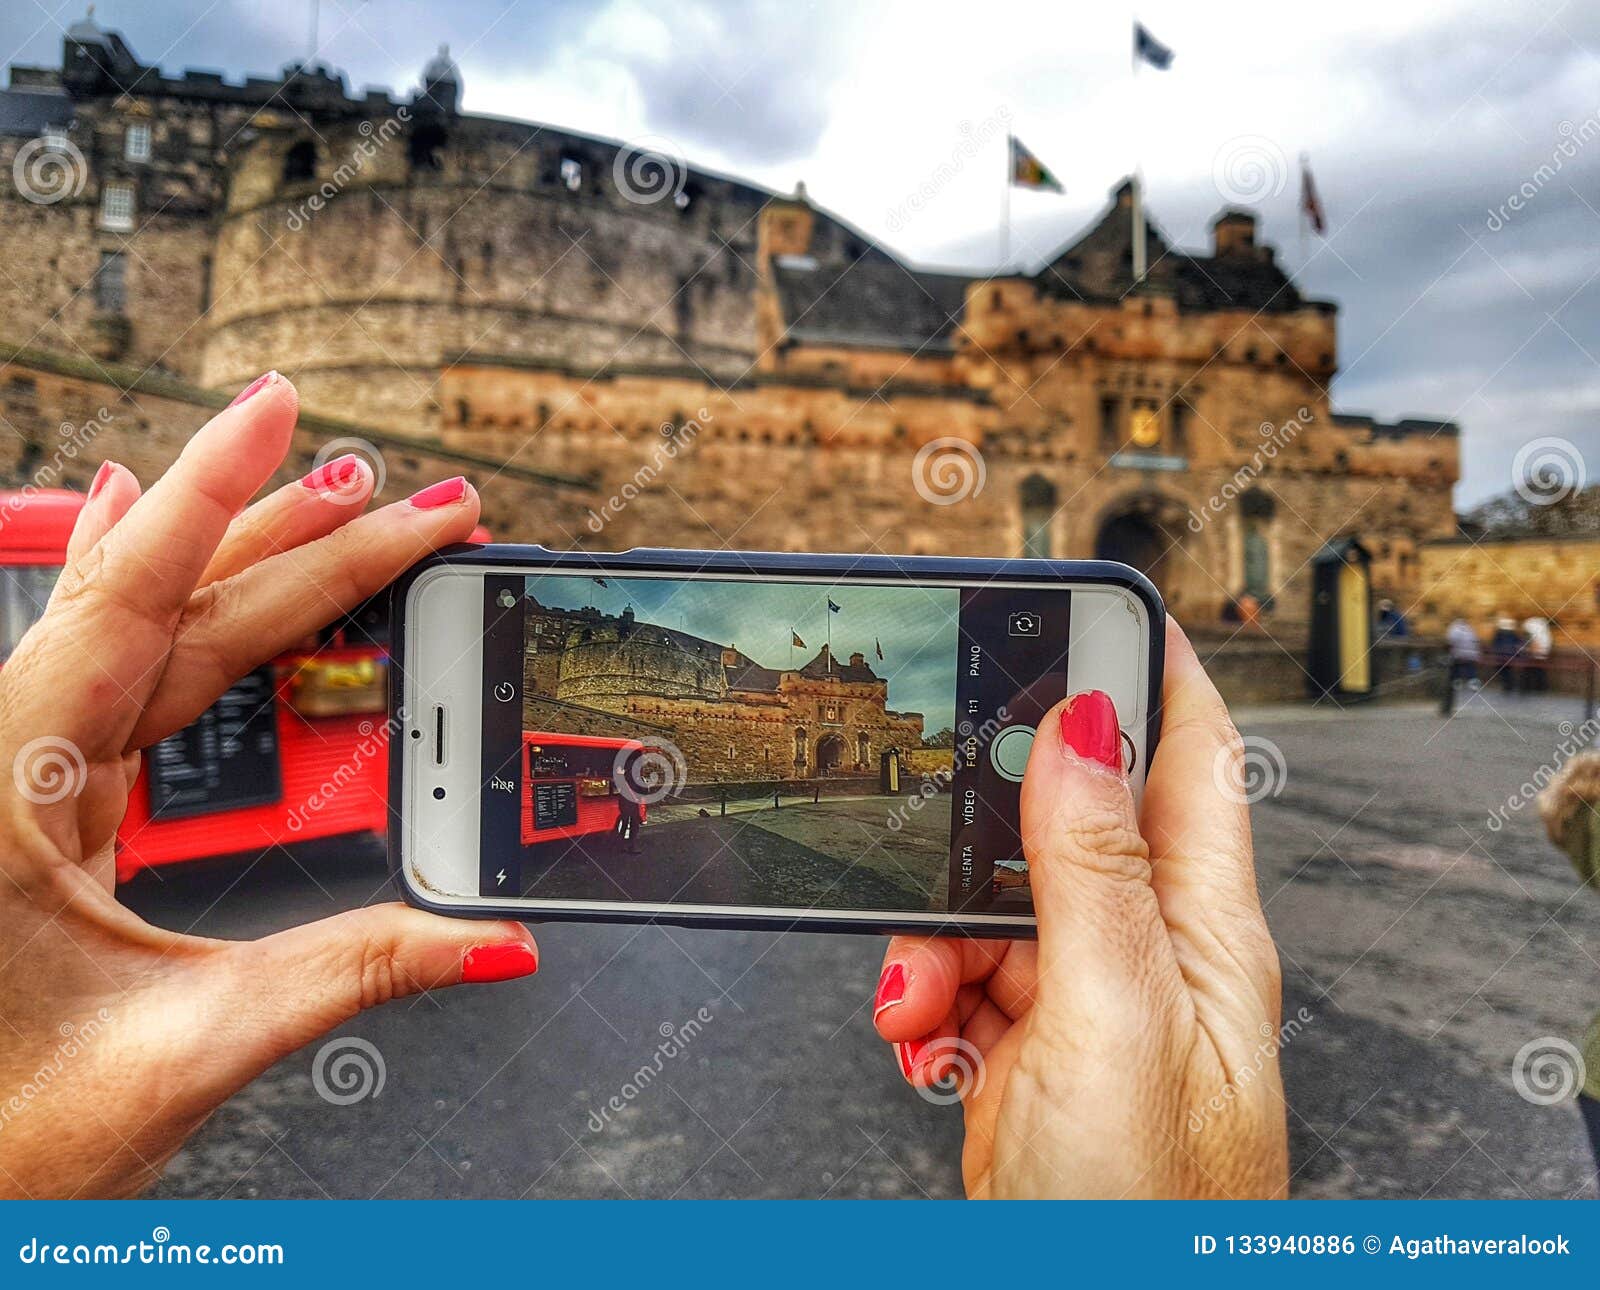 edinburgh castle escocia turist